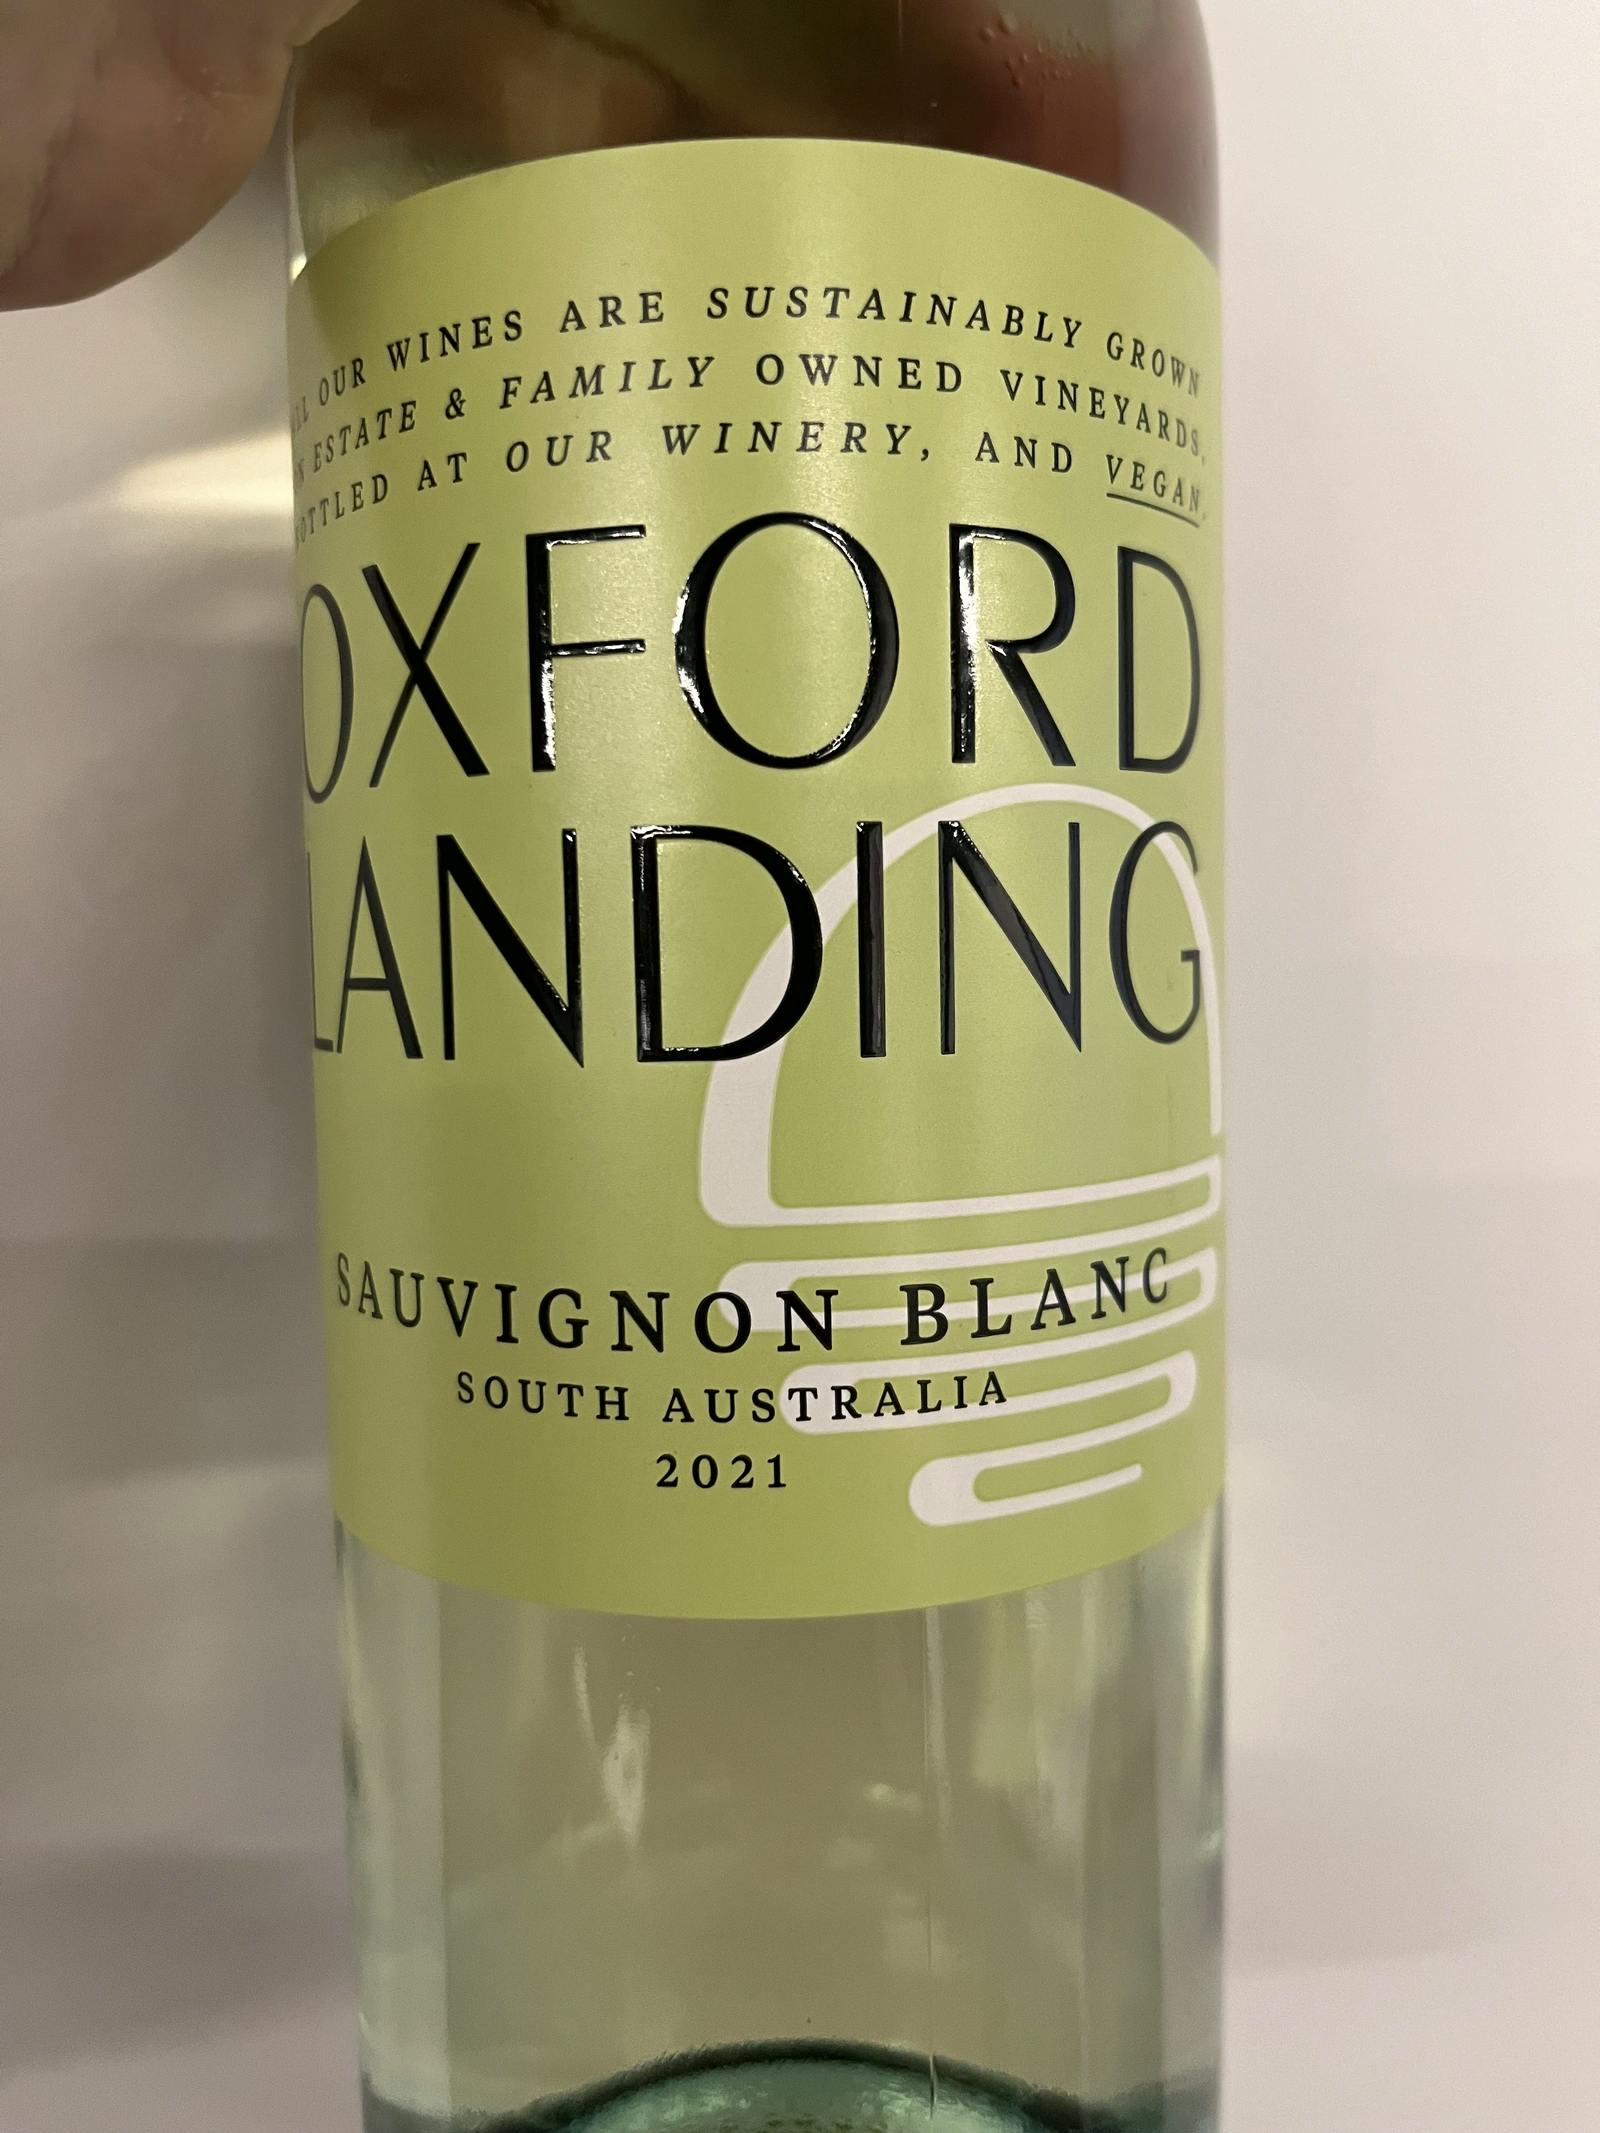 Oxford Landing Sauvignon Blanc 2021